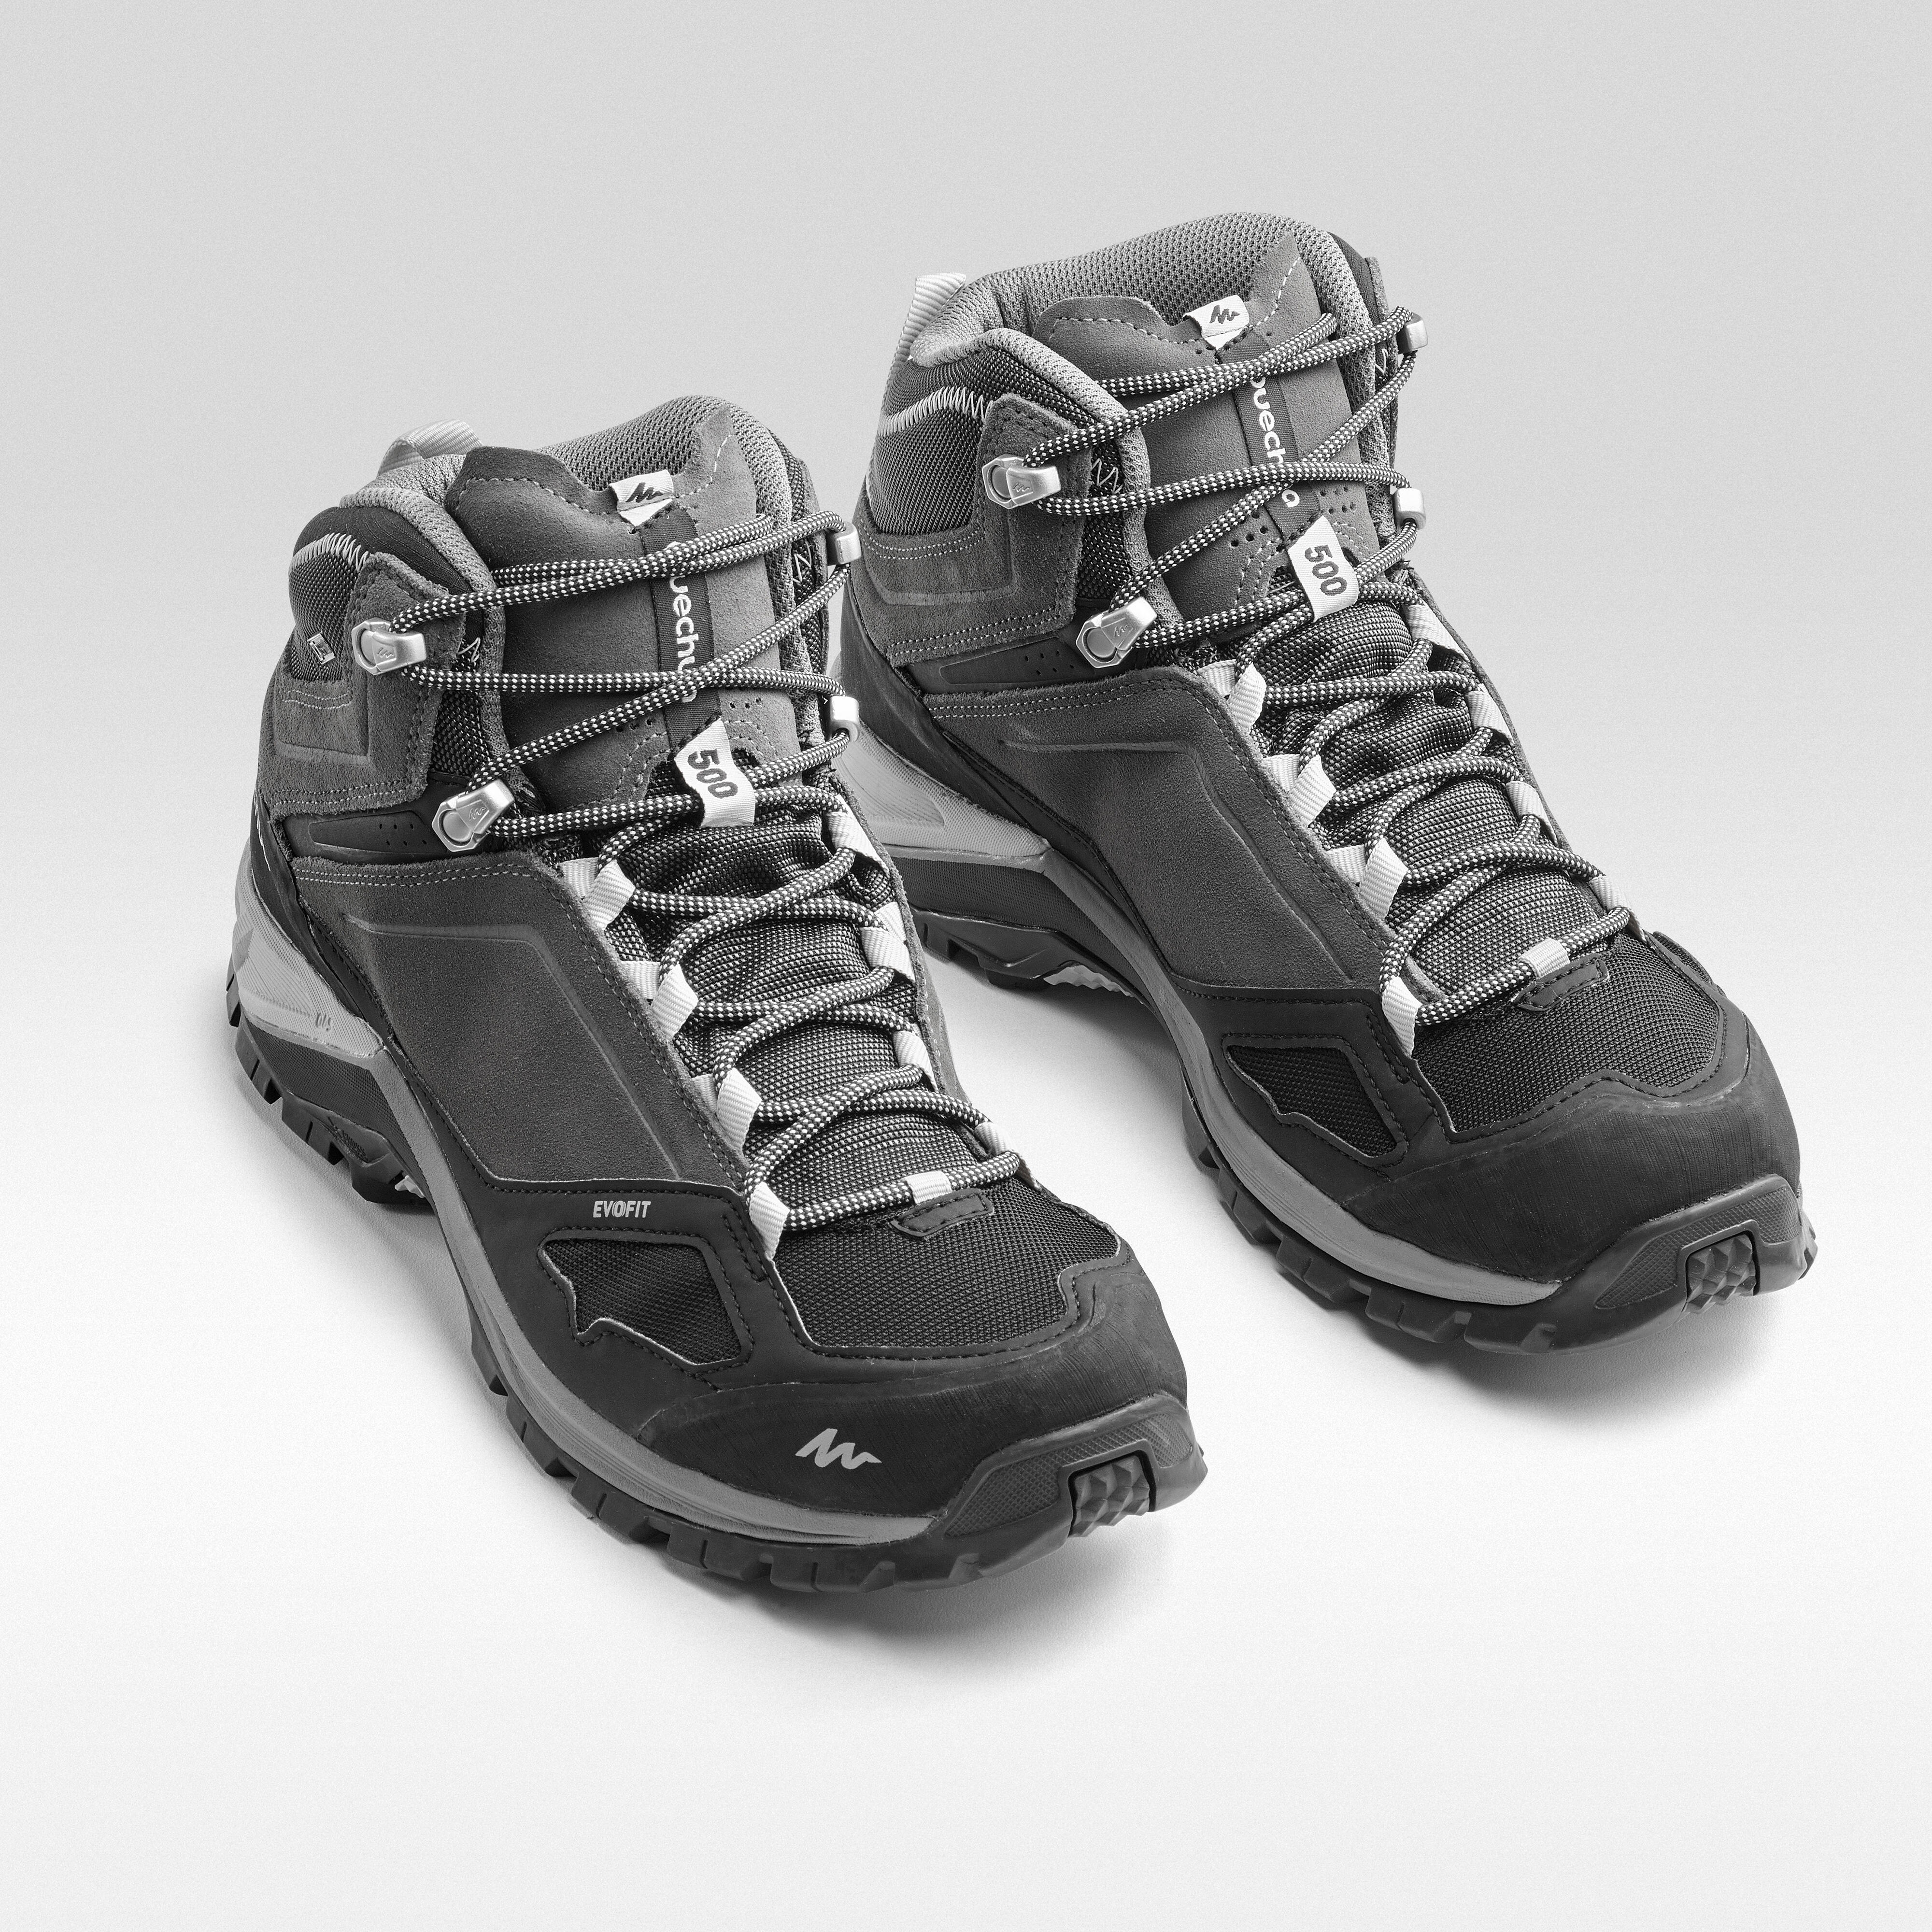 Men's waterproof mountain hiking boots 